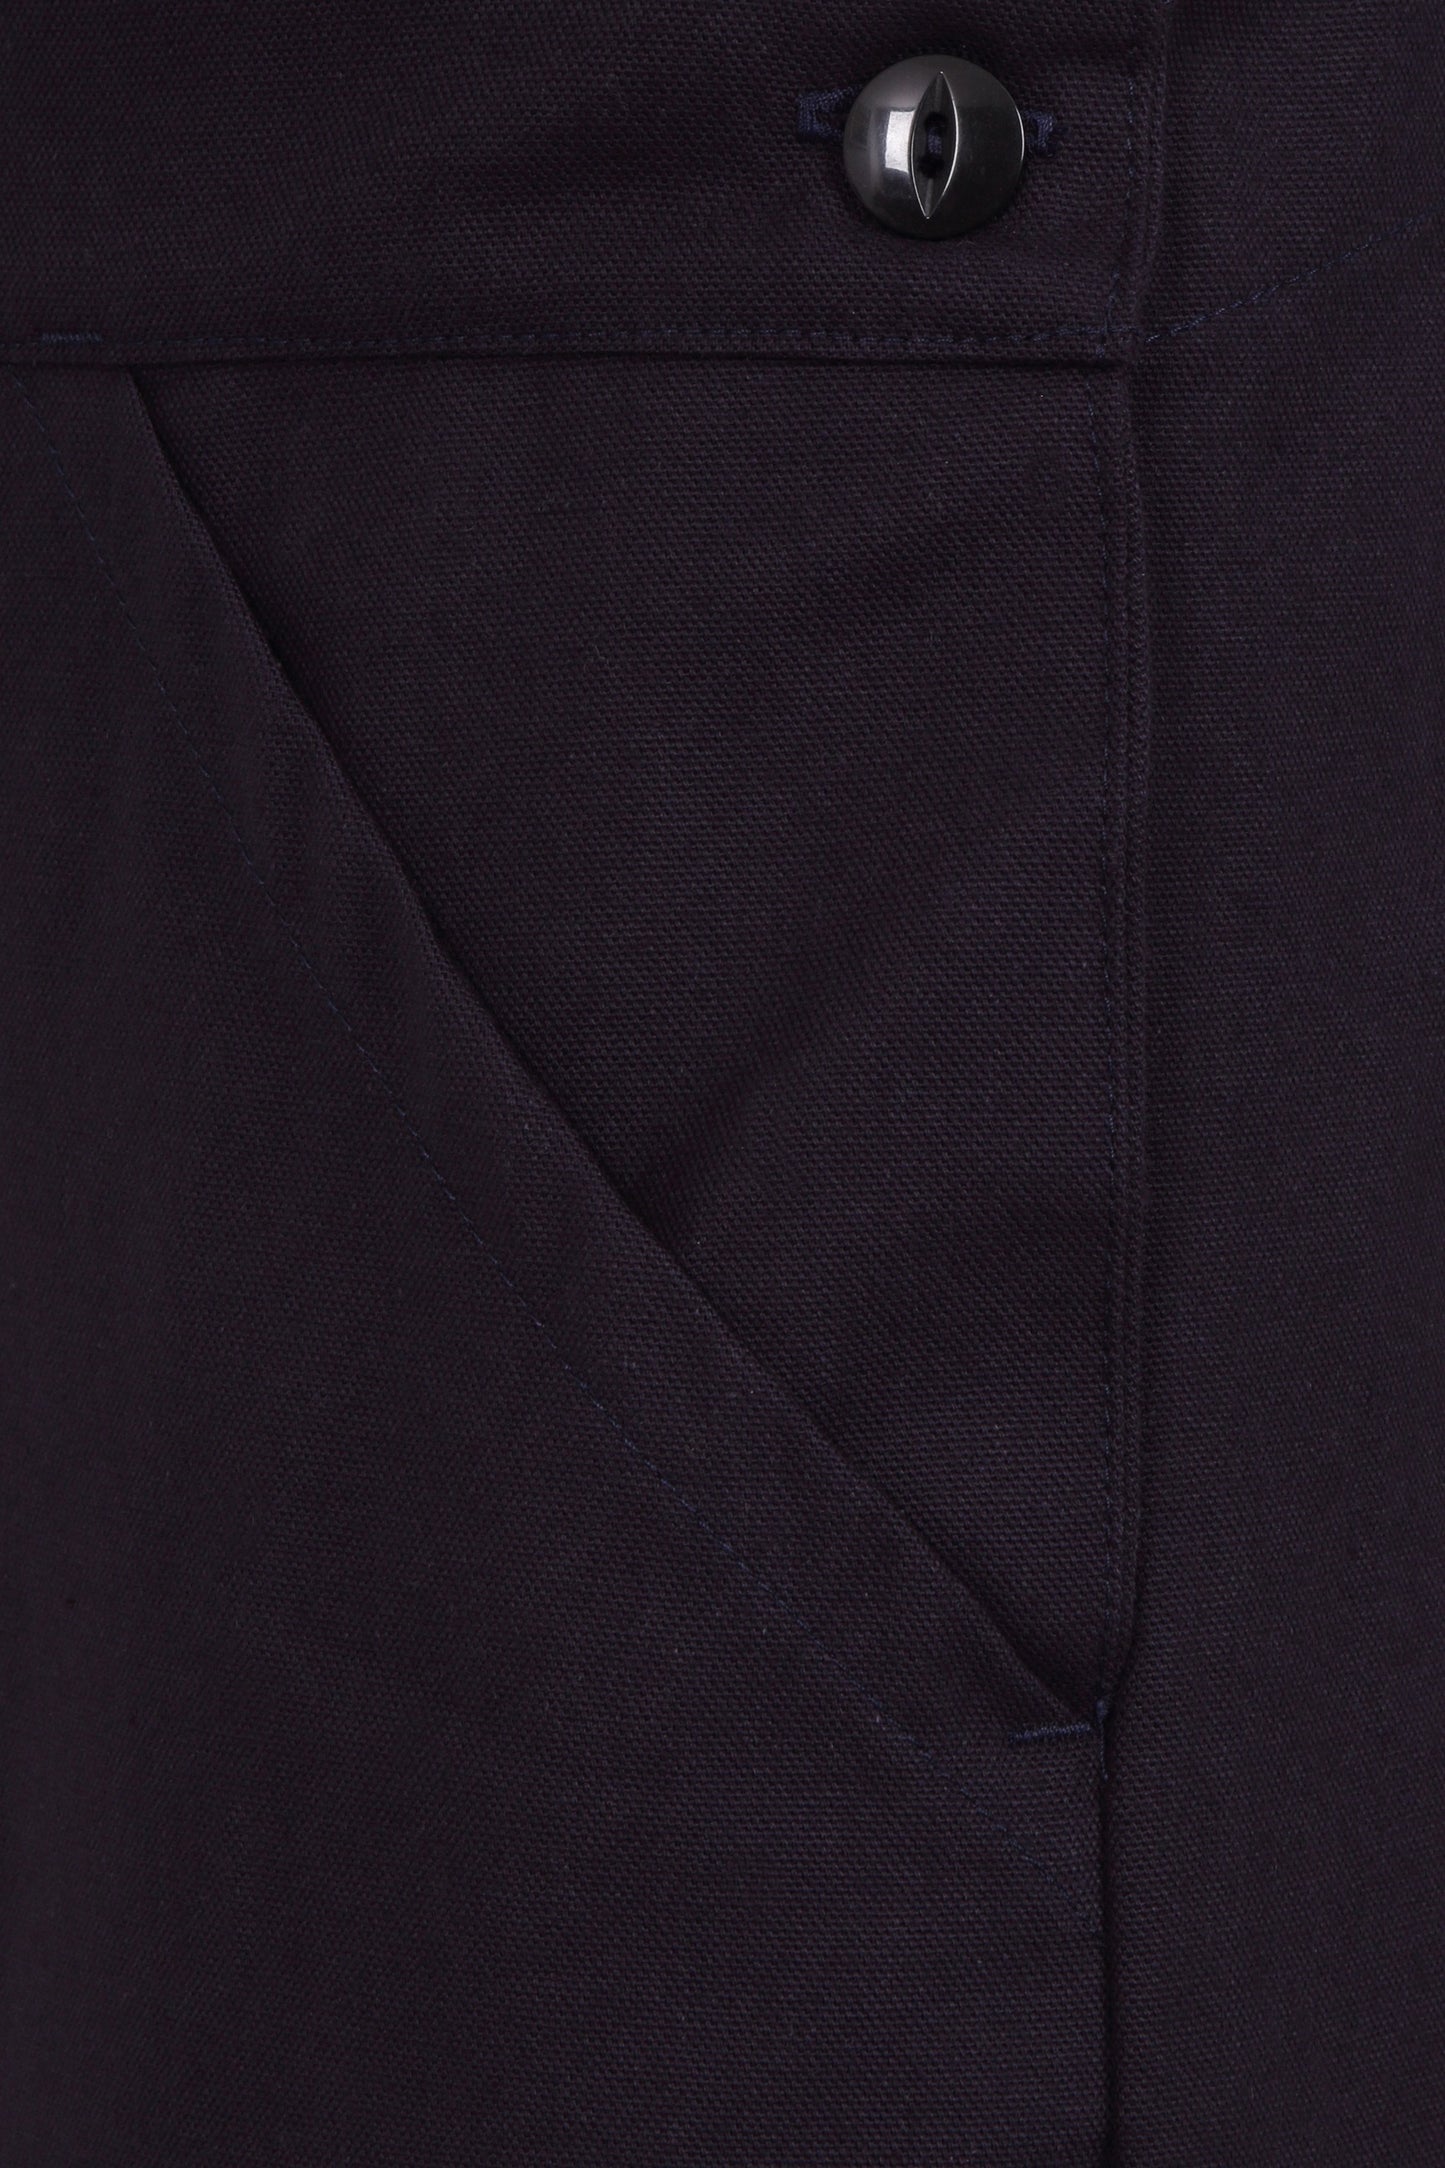 Yarmo Bib and Brace Overalls, Sailcloth Cotton - BB011